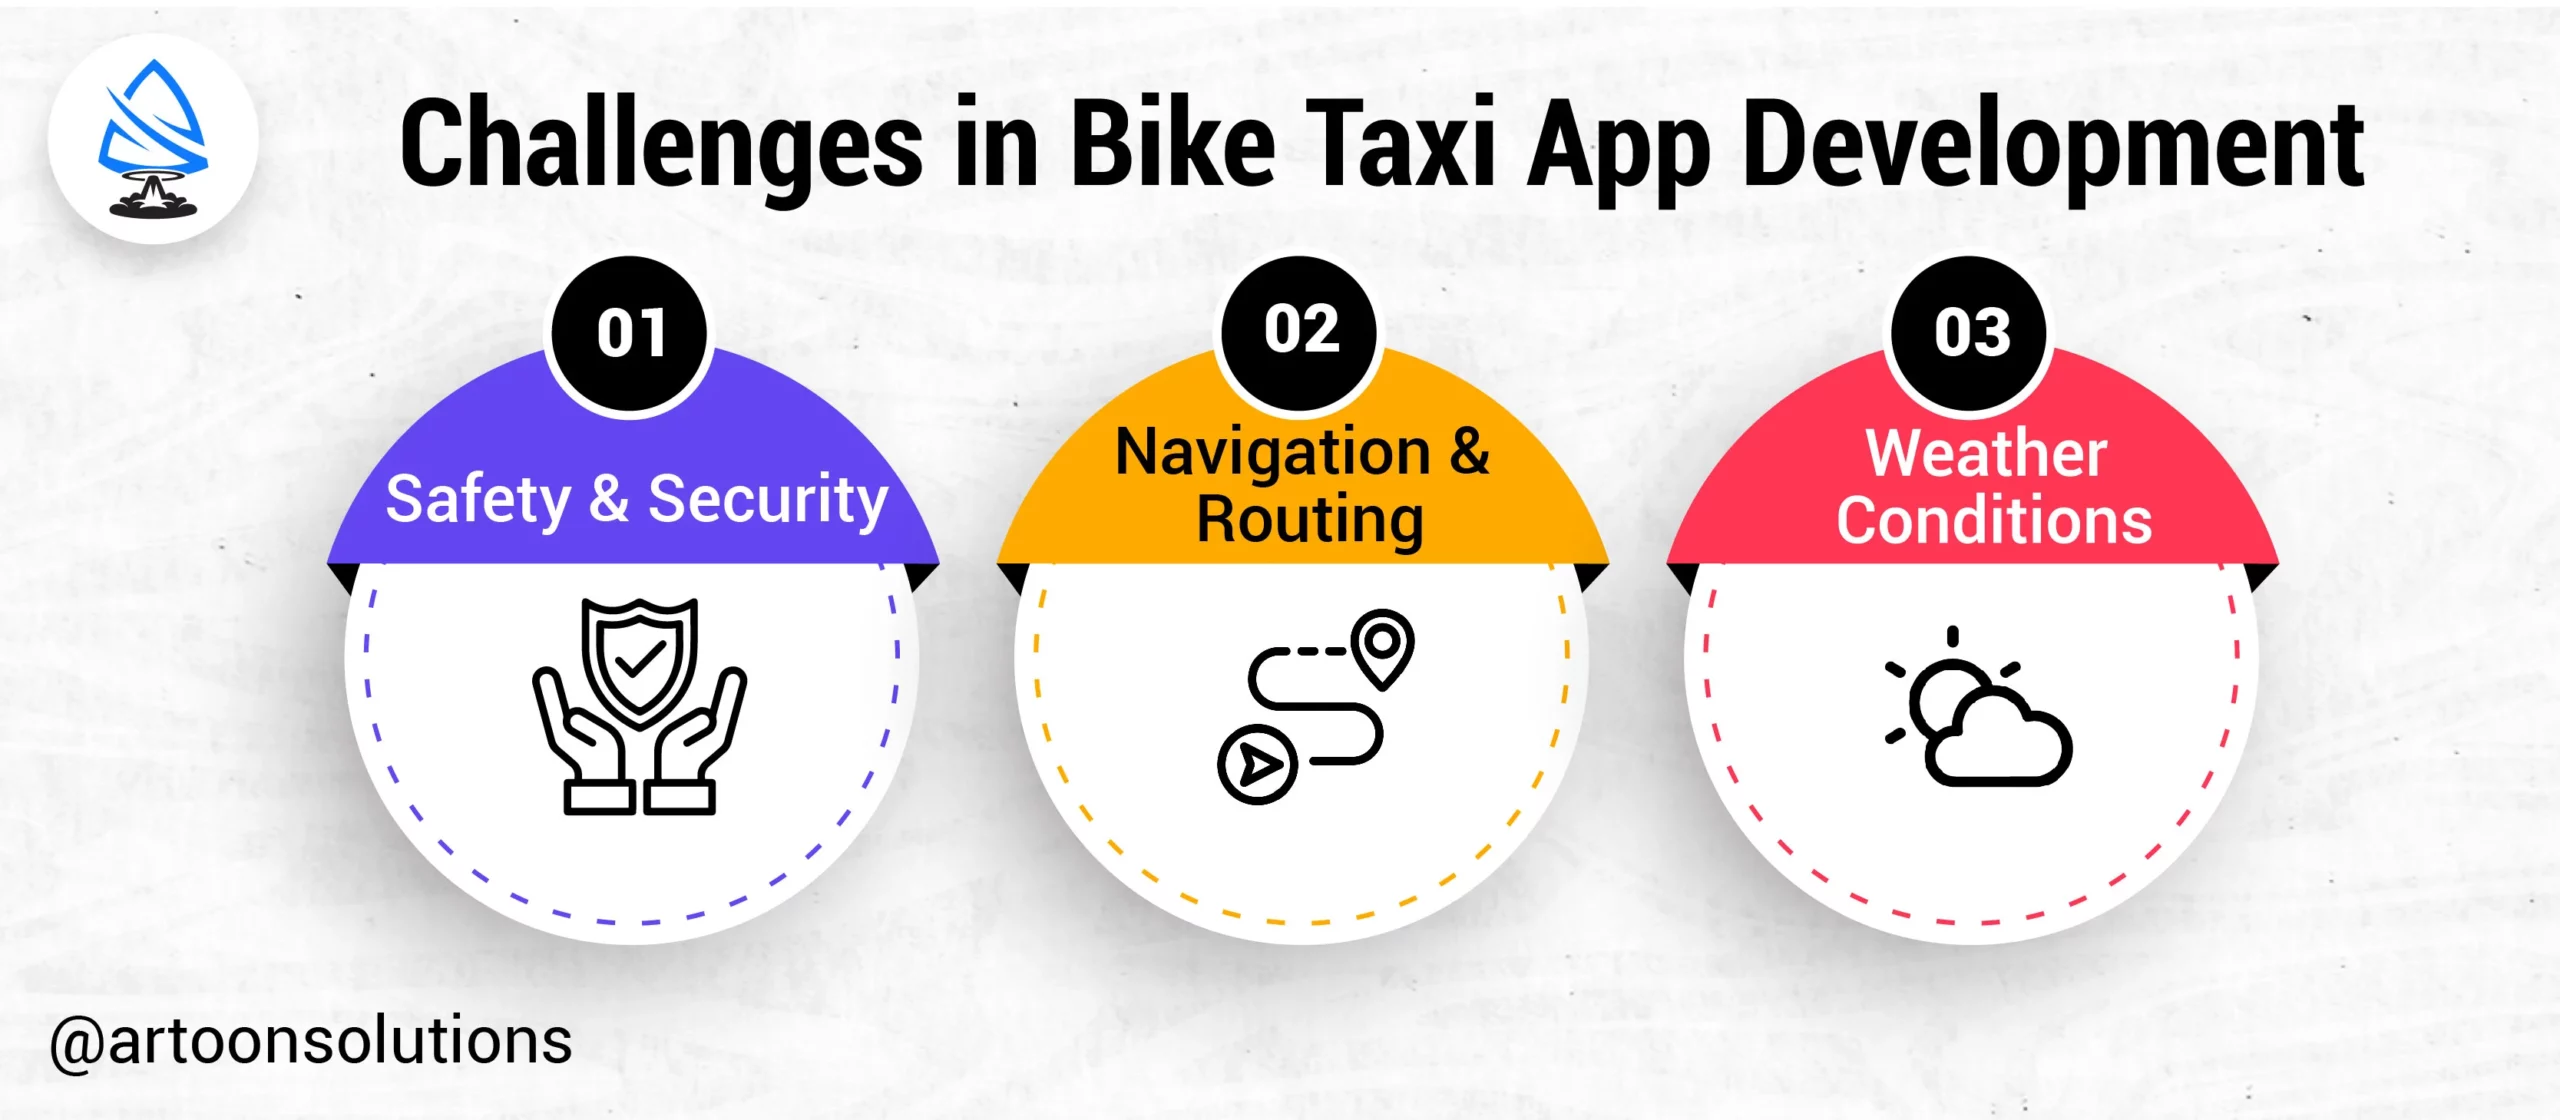 Challenges in Bike Taxi App Development